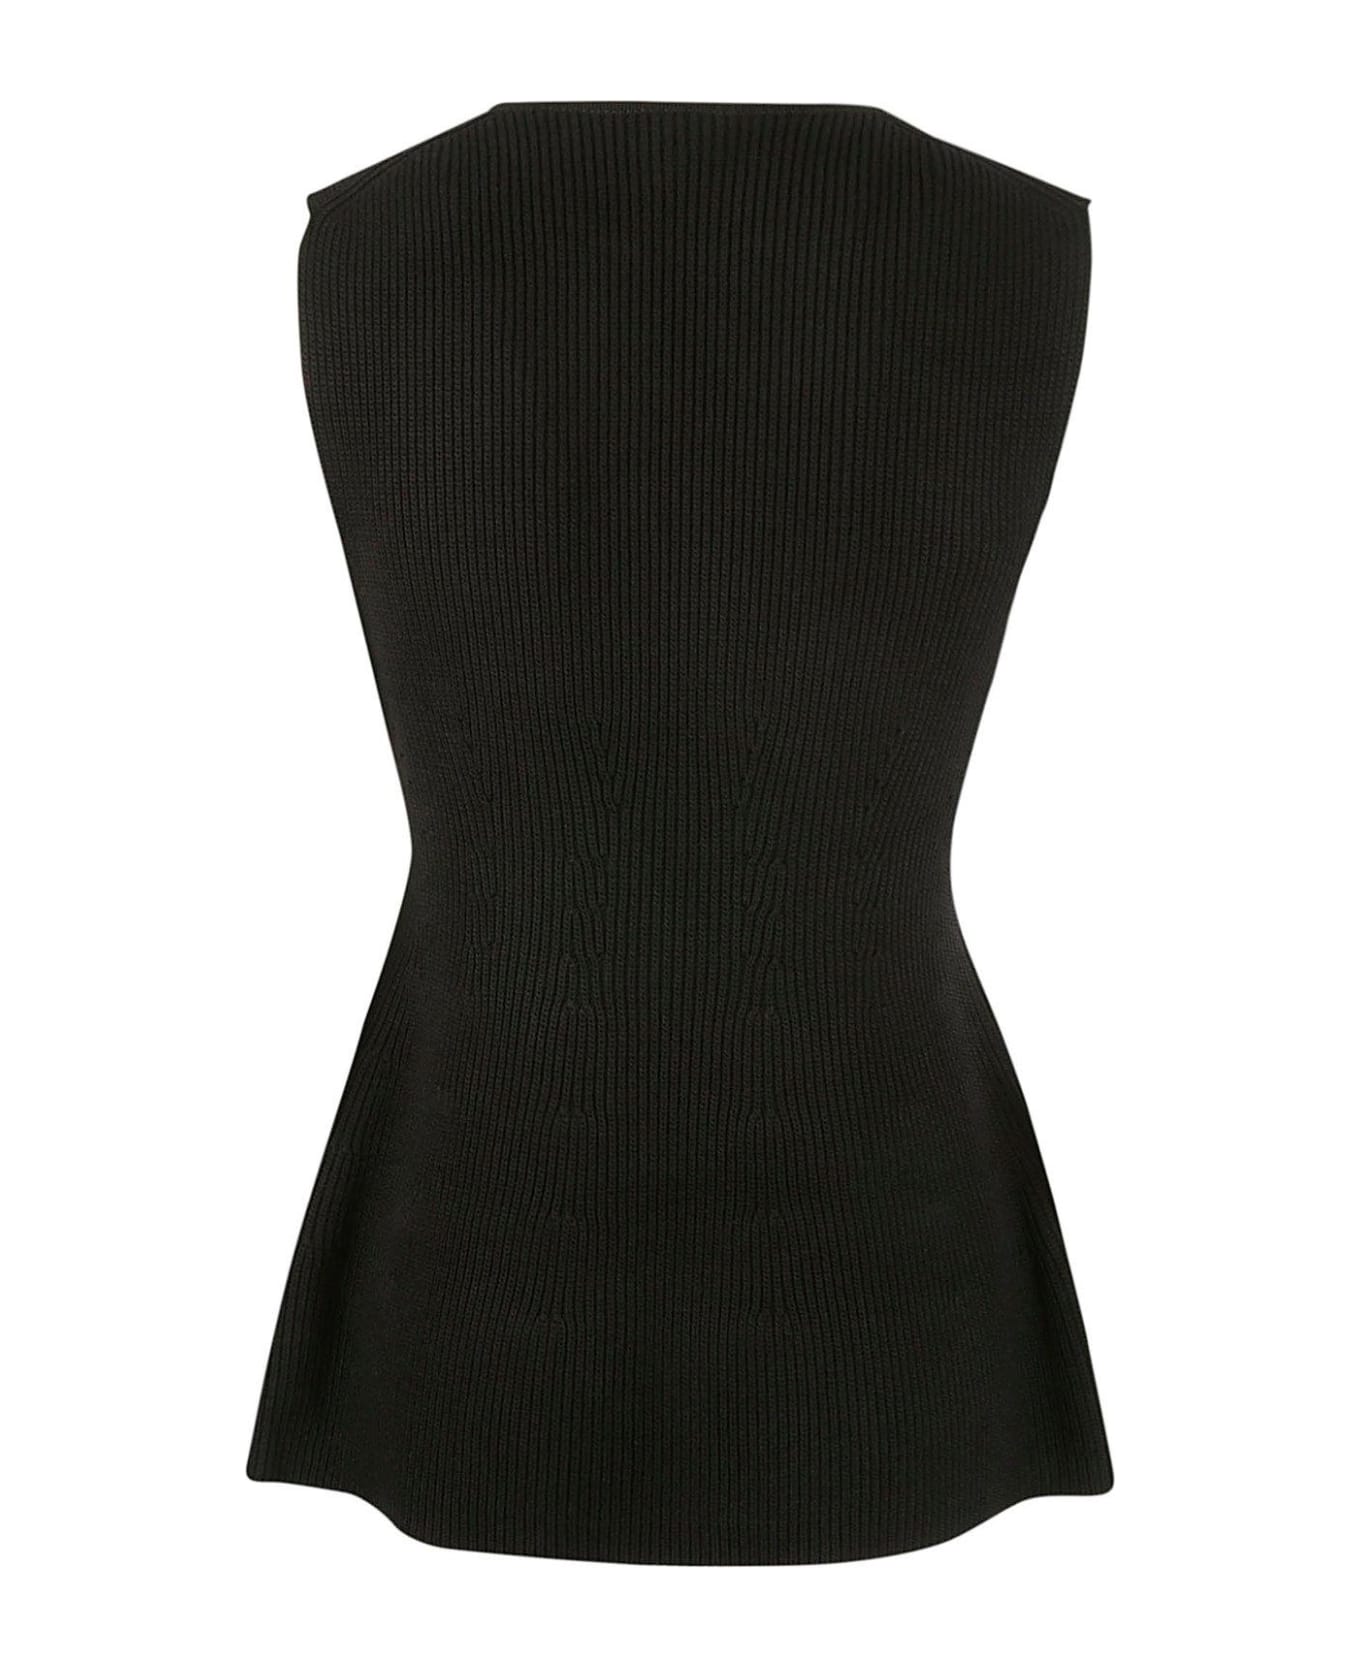 Totême Sleeveless Knitted Top - 200 BLACK